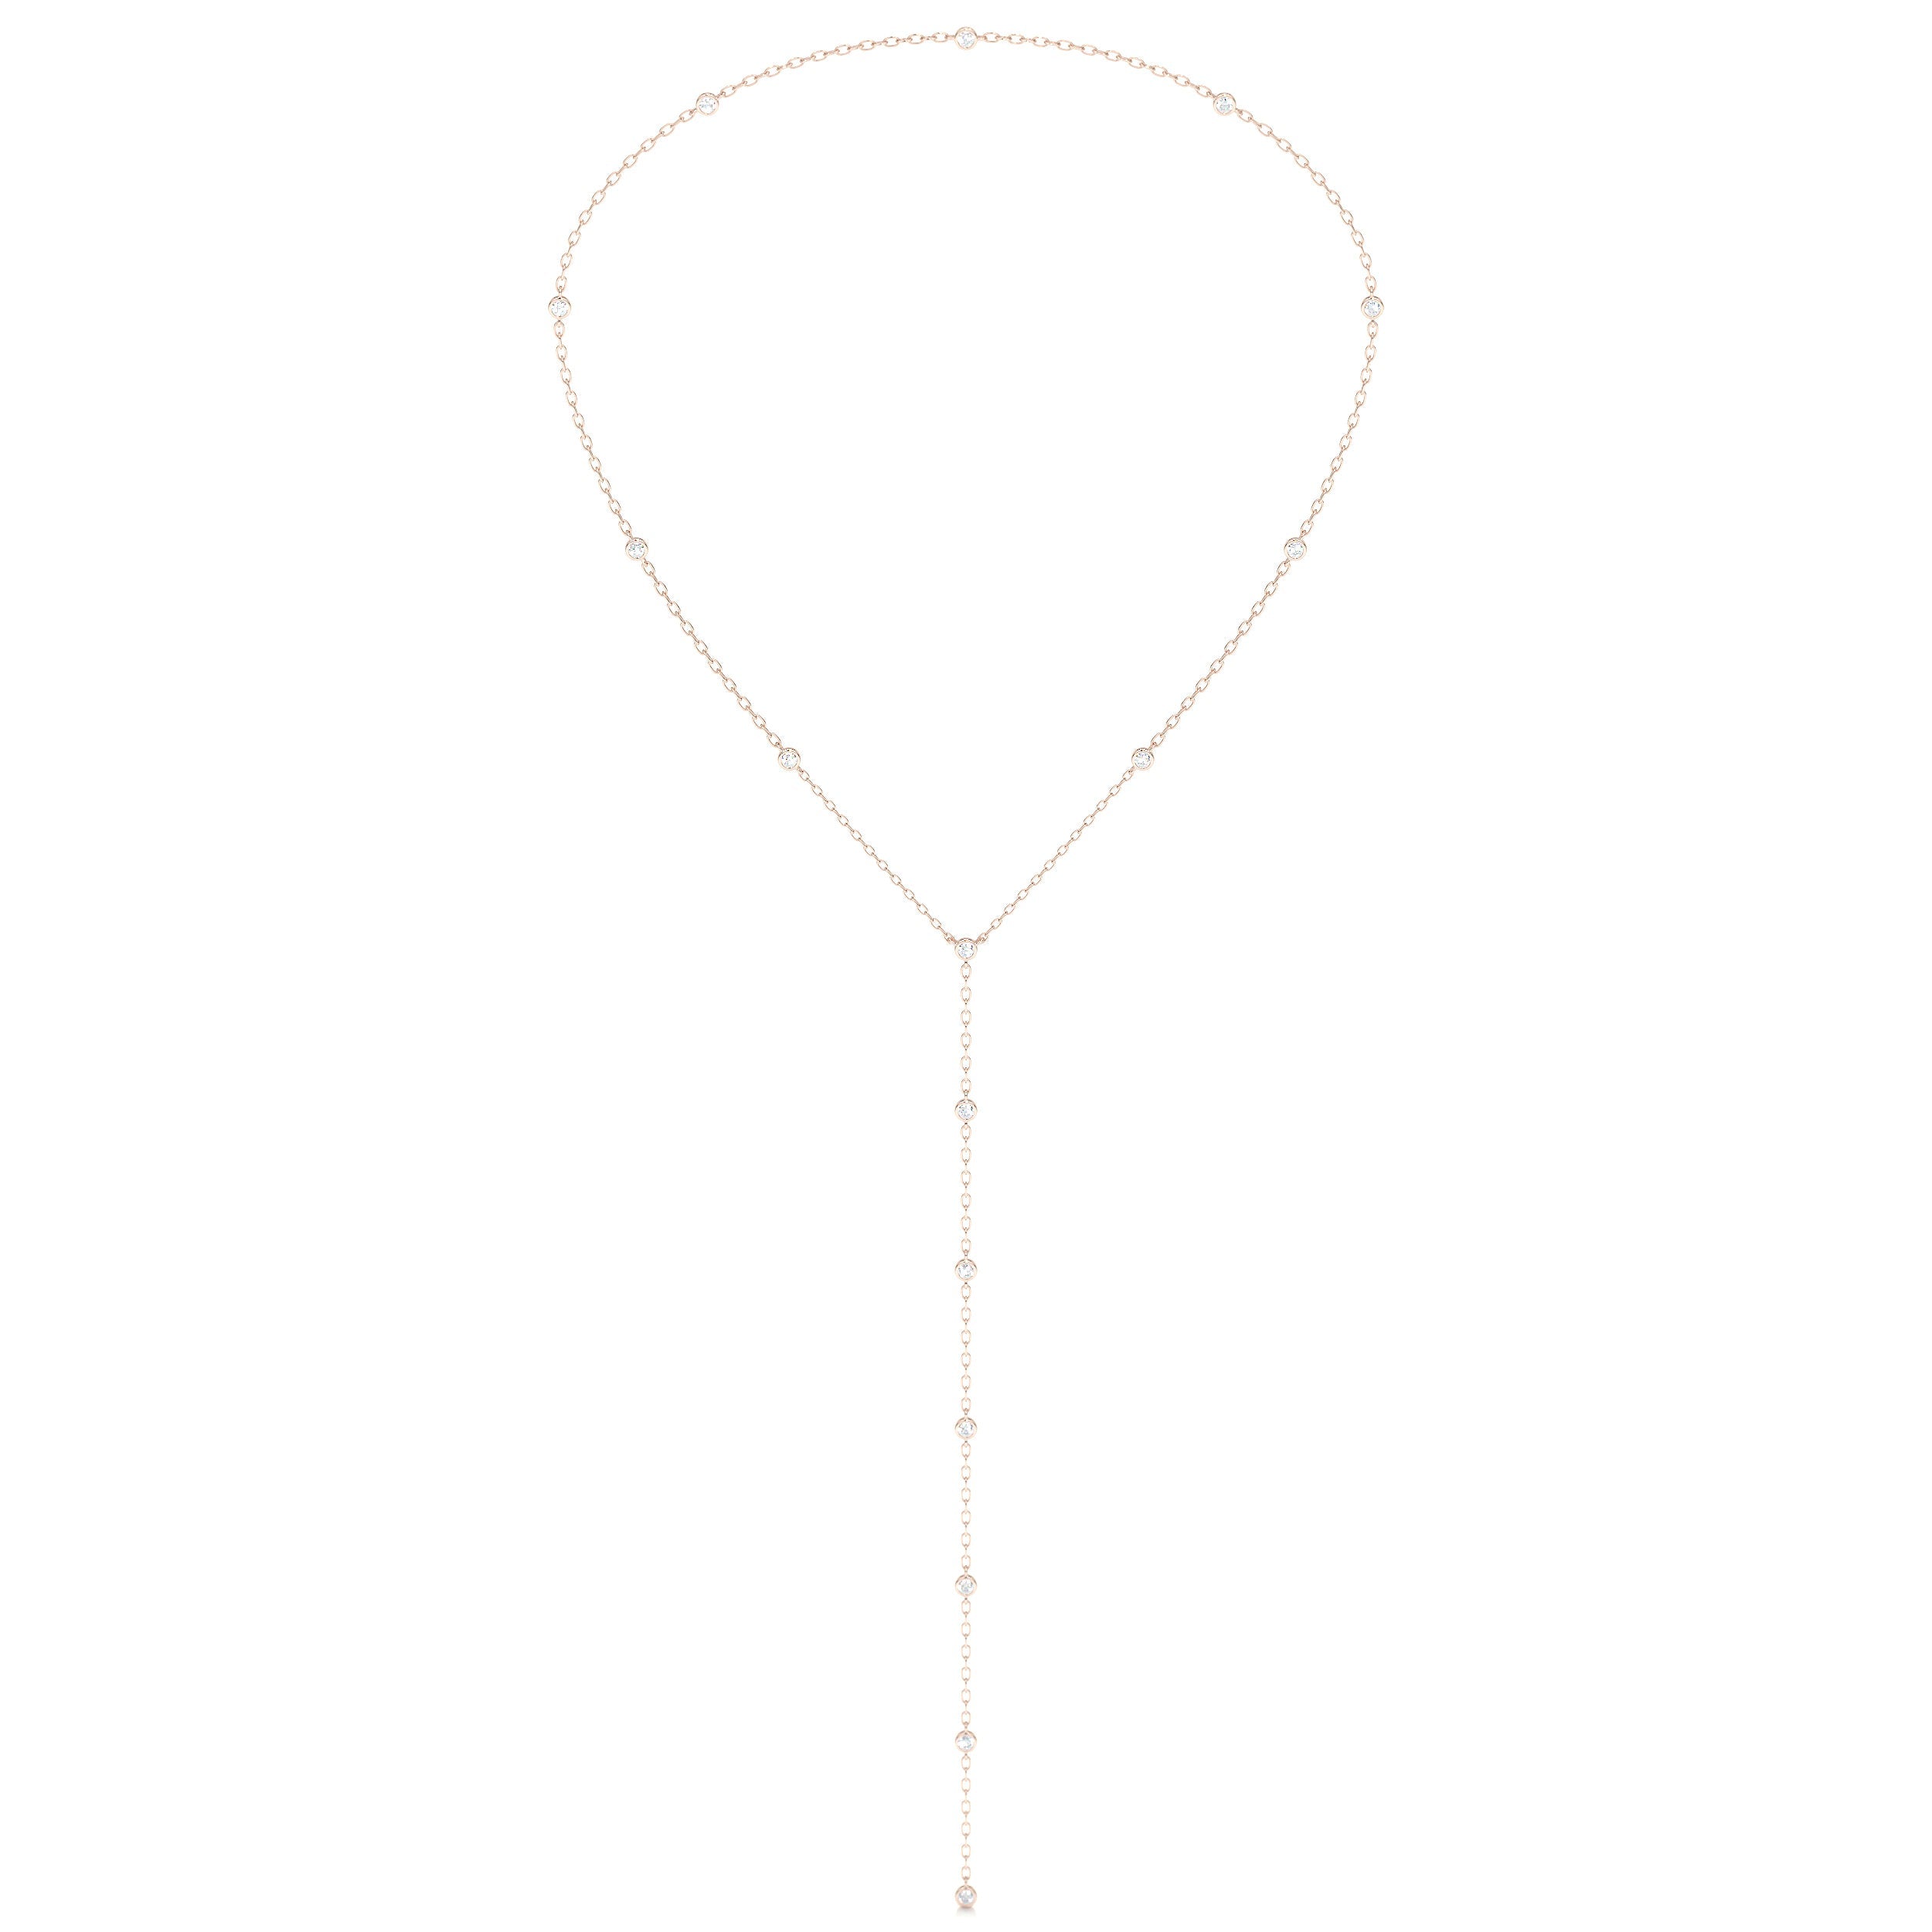 Tie Lab Grown Diamond Necklace   (1.1 Carat) -14K Rose Gold